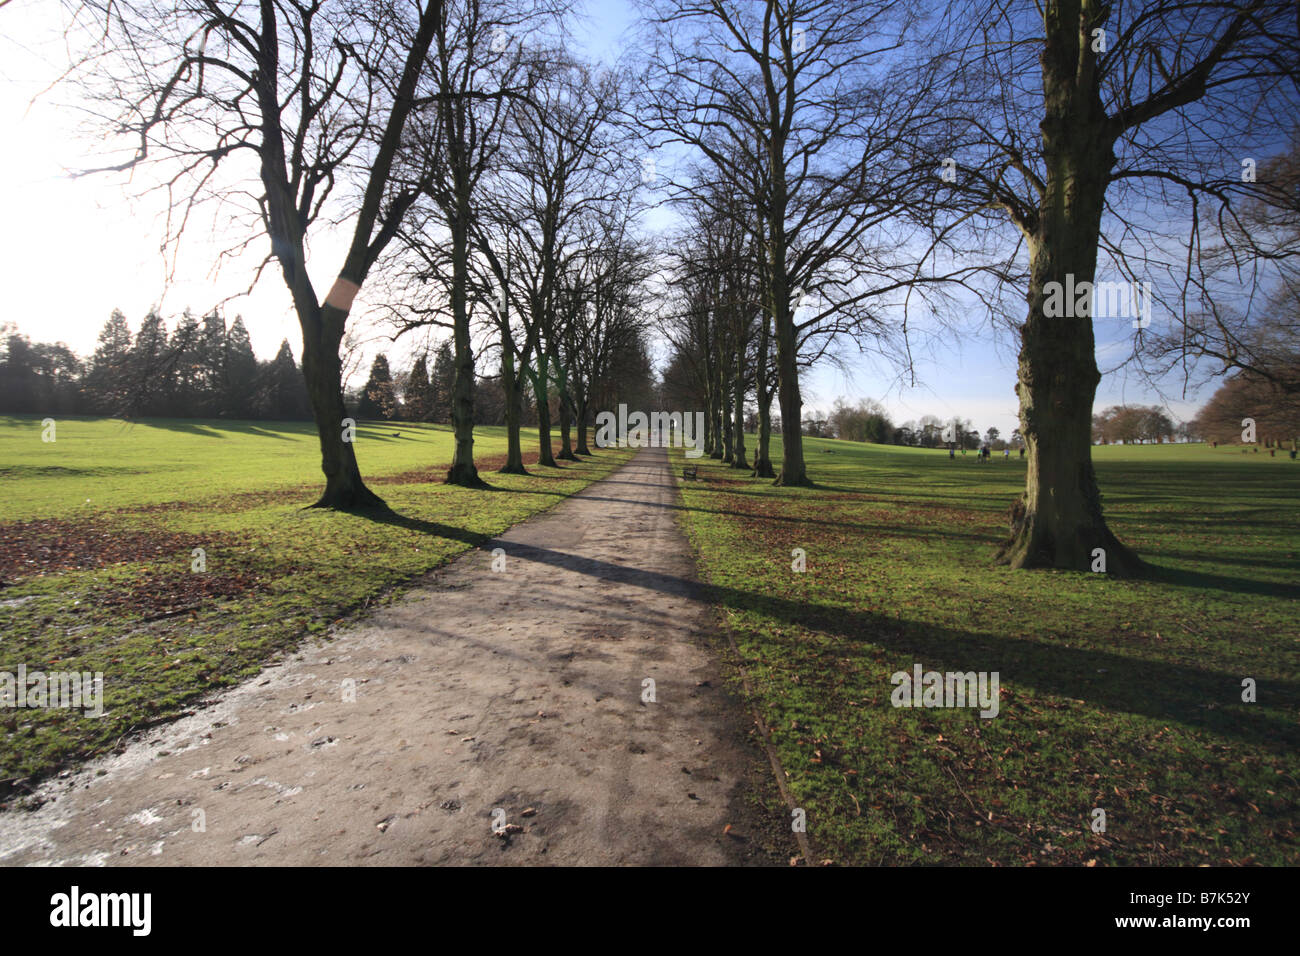 Tree lined path through park Stock Photo